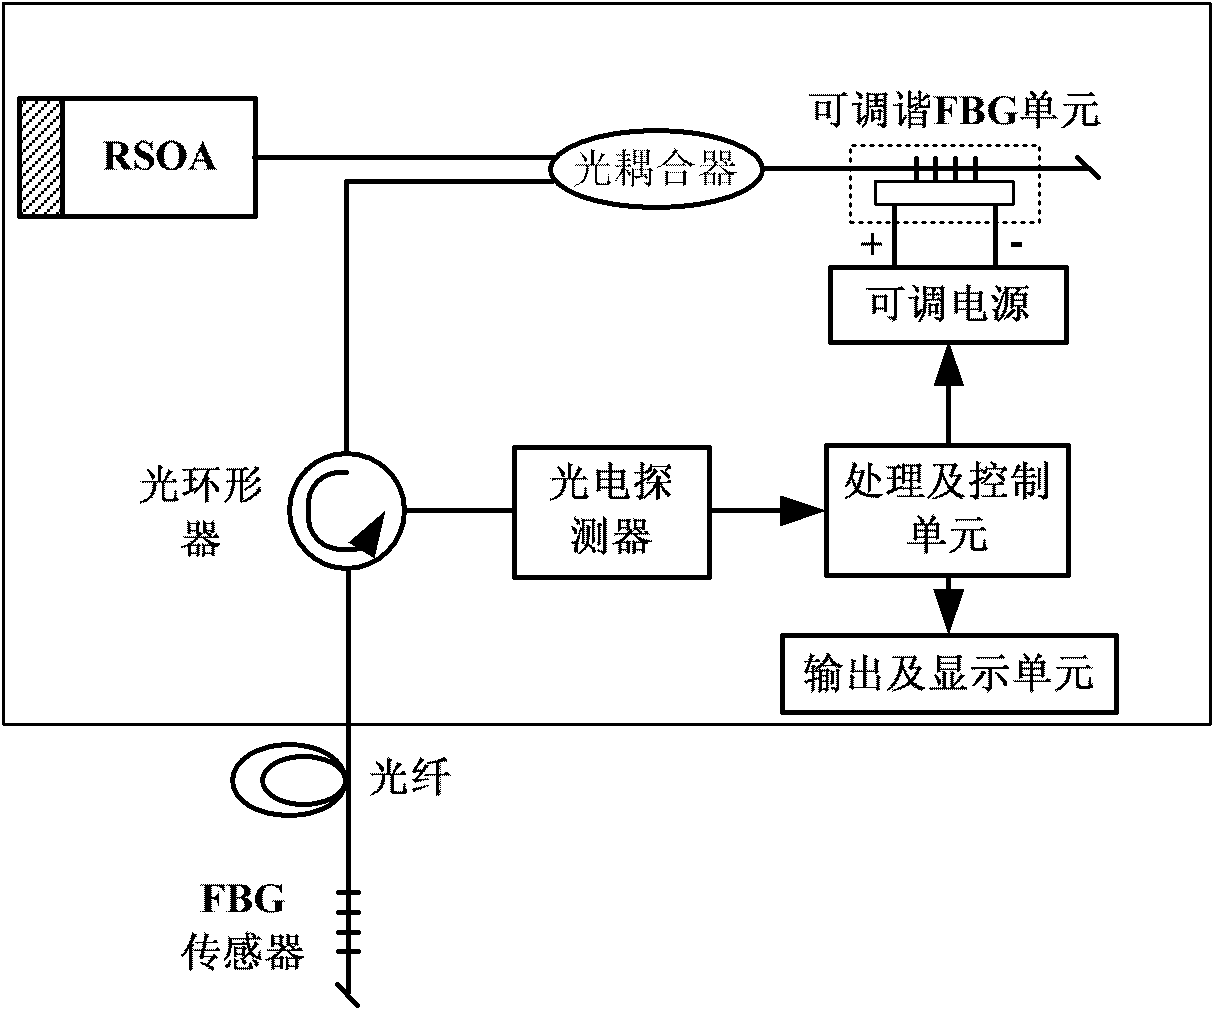 Fiber bragg grating (FBG) sensing demodulation device and method based on reflective semiconductor optical amplifier (RSOA)